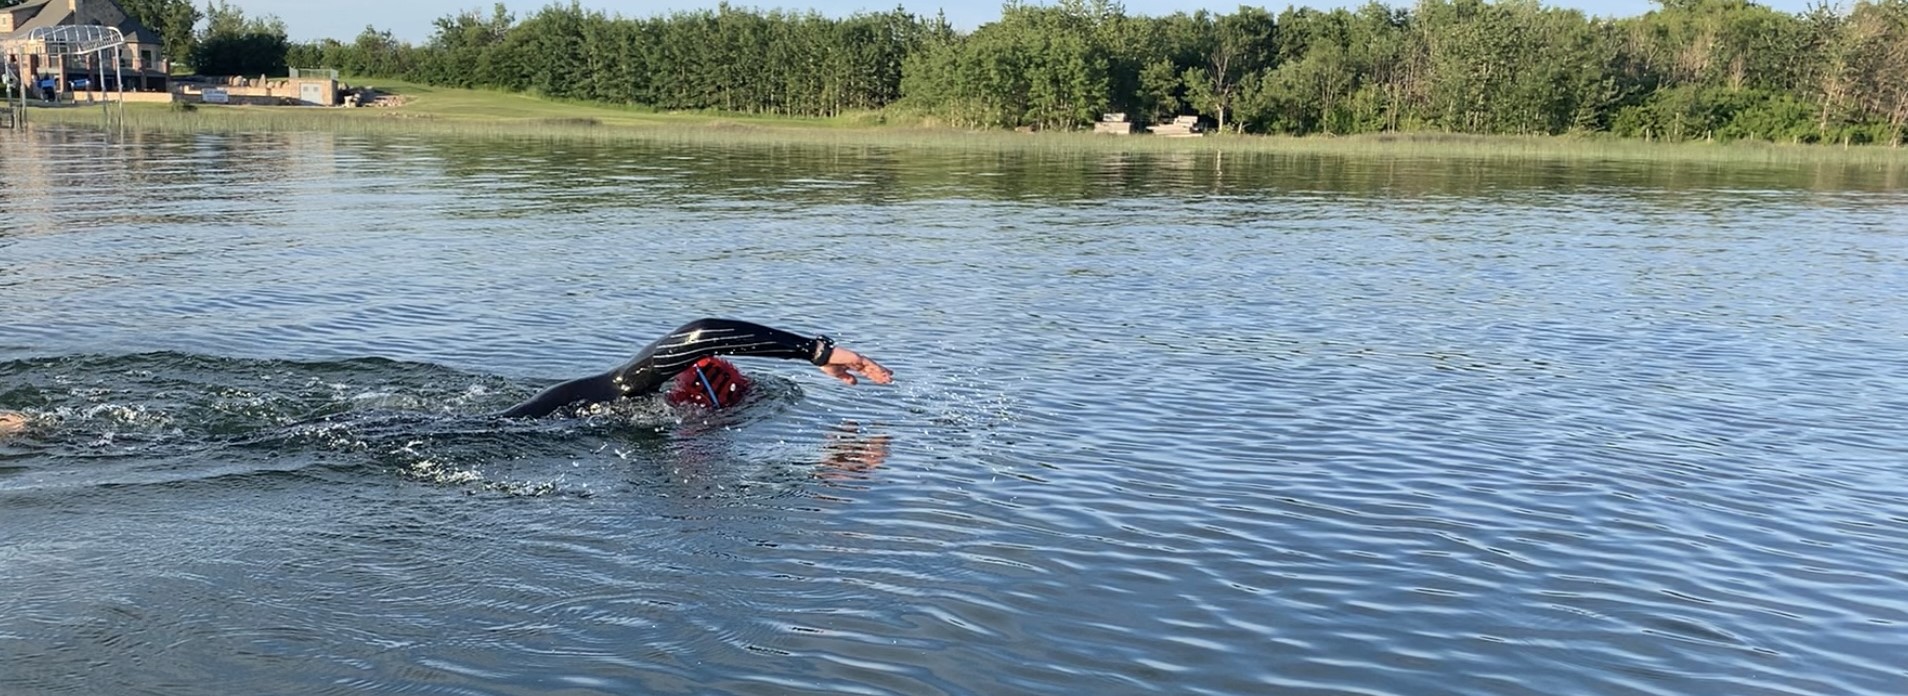 Swimmer in lake